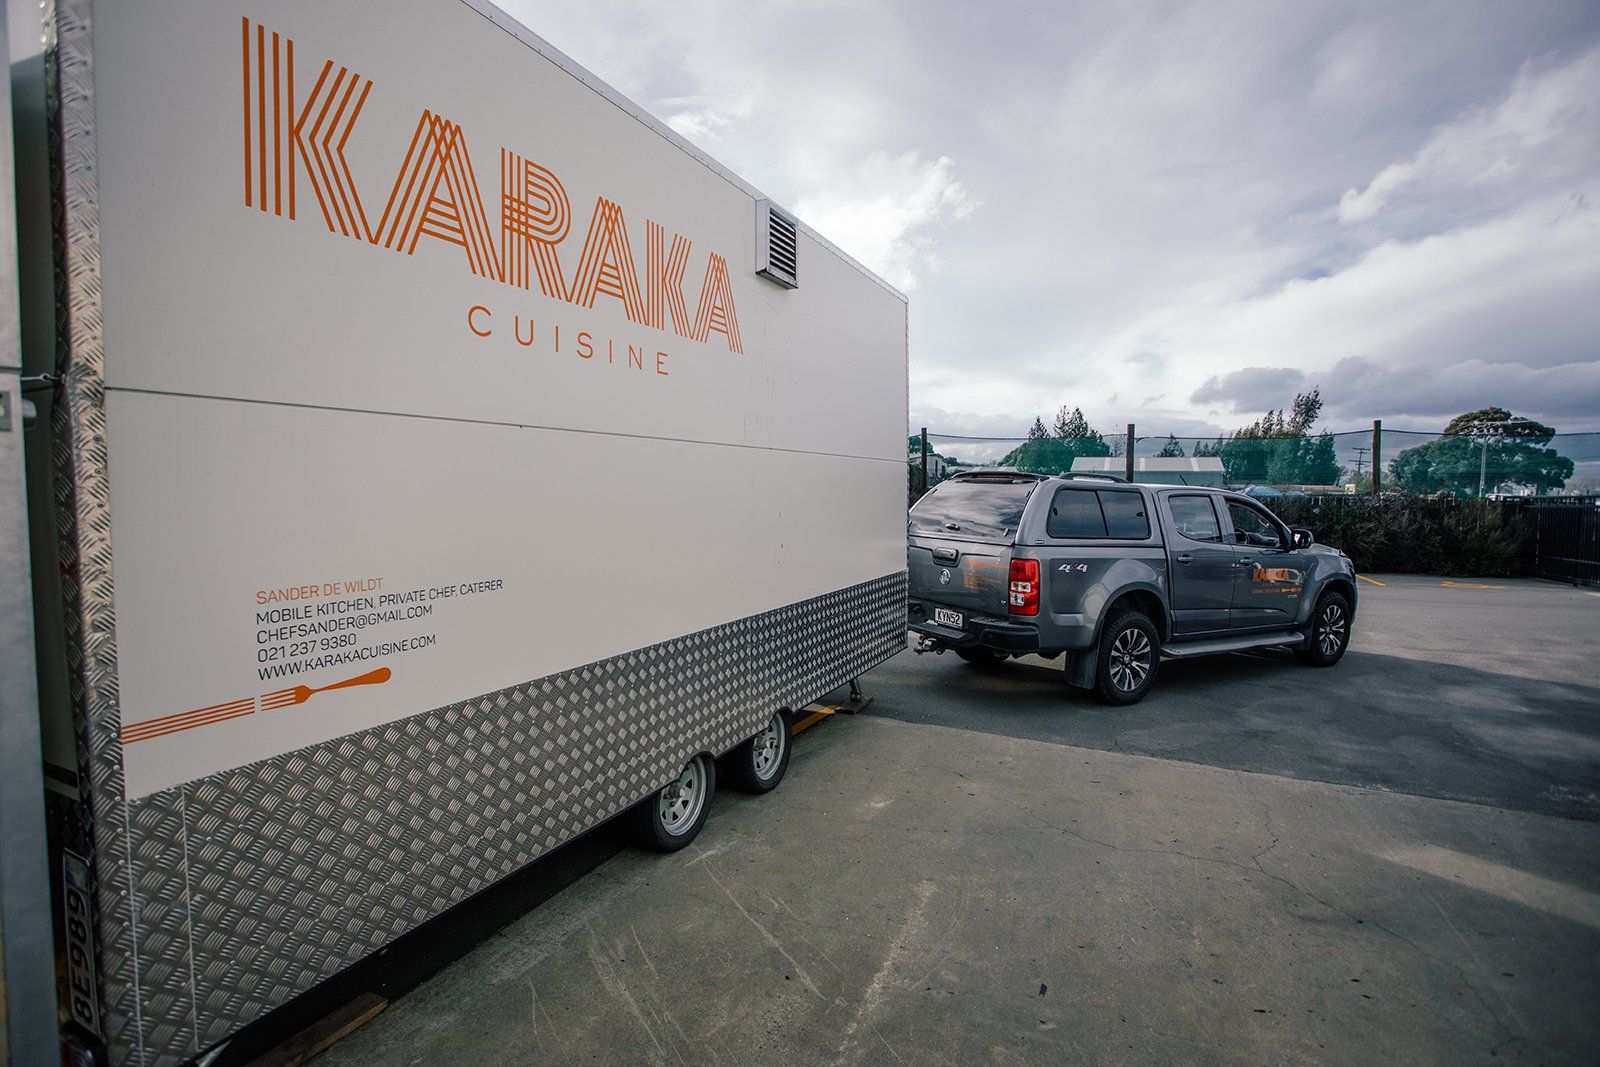 Karaka Cuisine in Blenheim, Marlborough NZ has a Mobile Kitchen for private catering